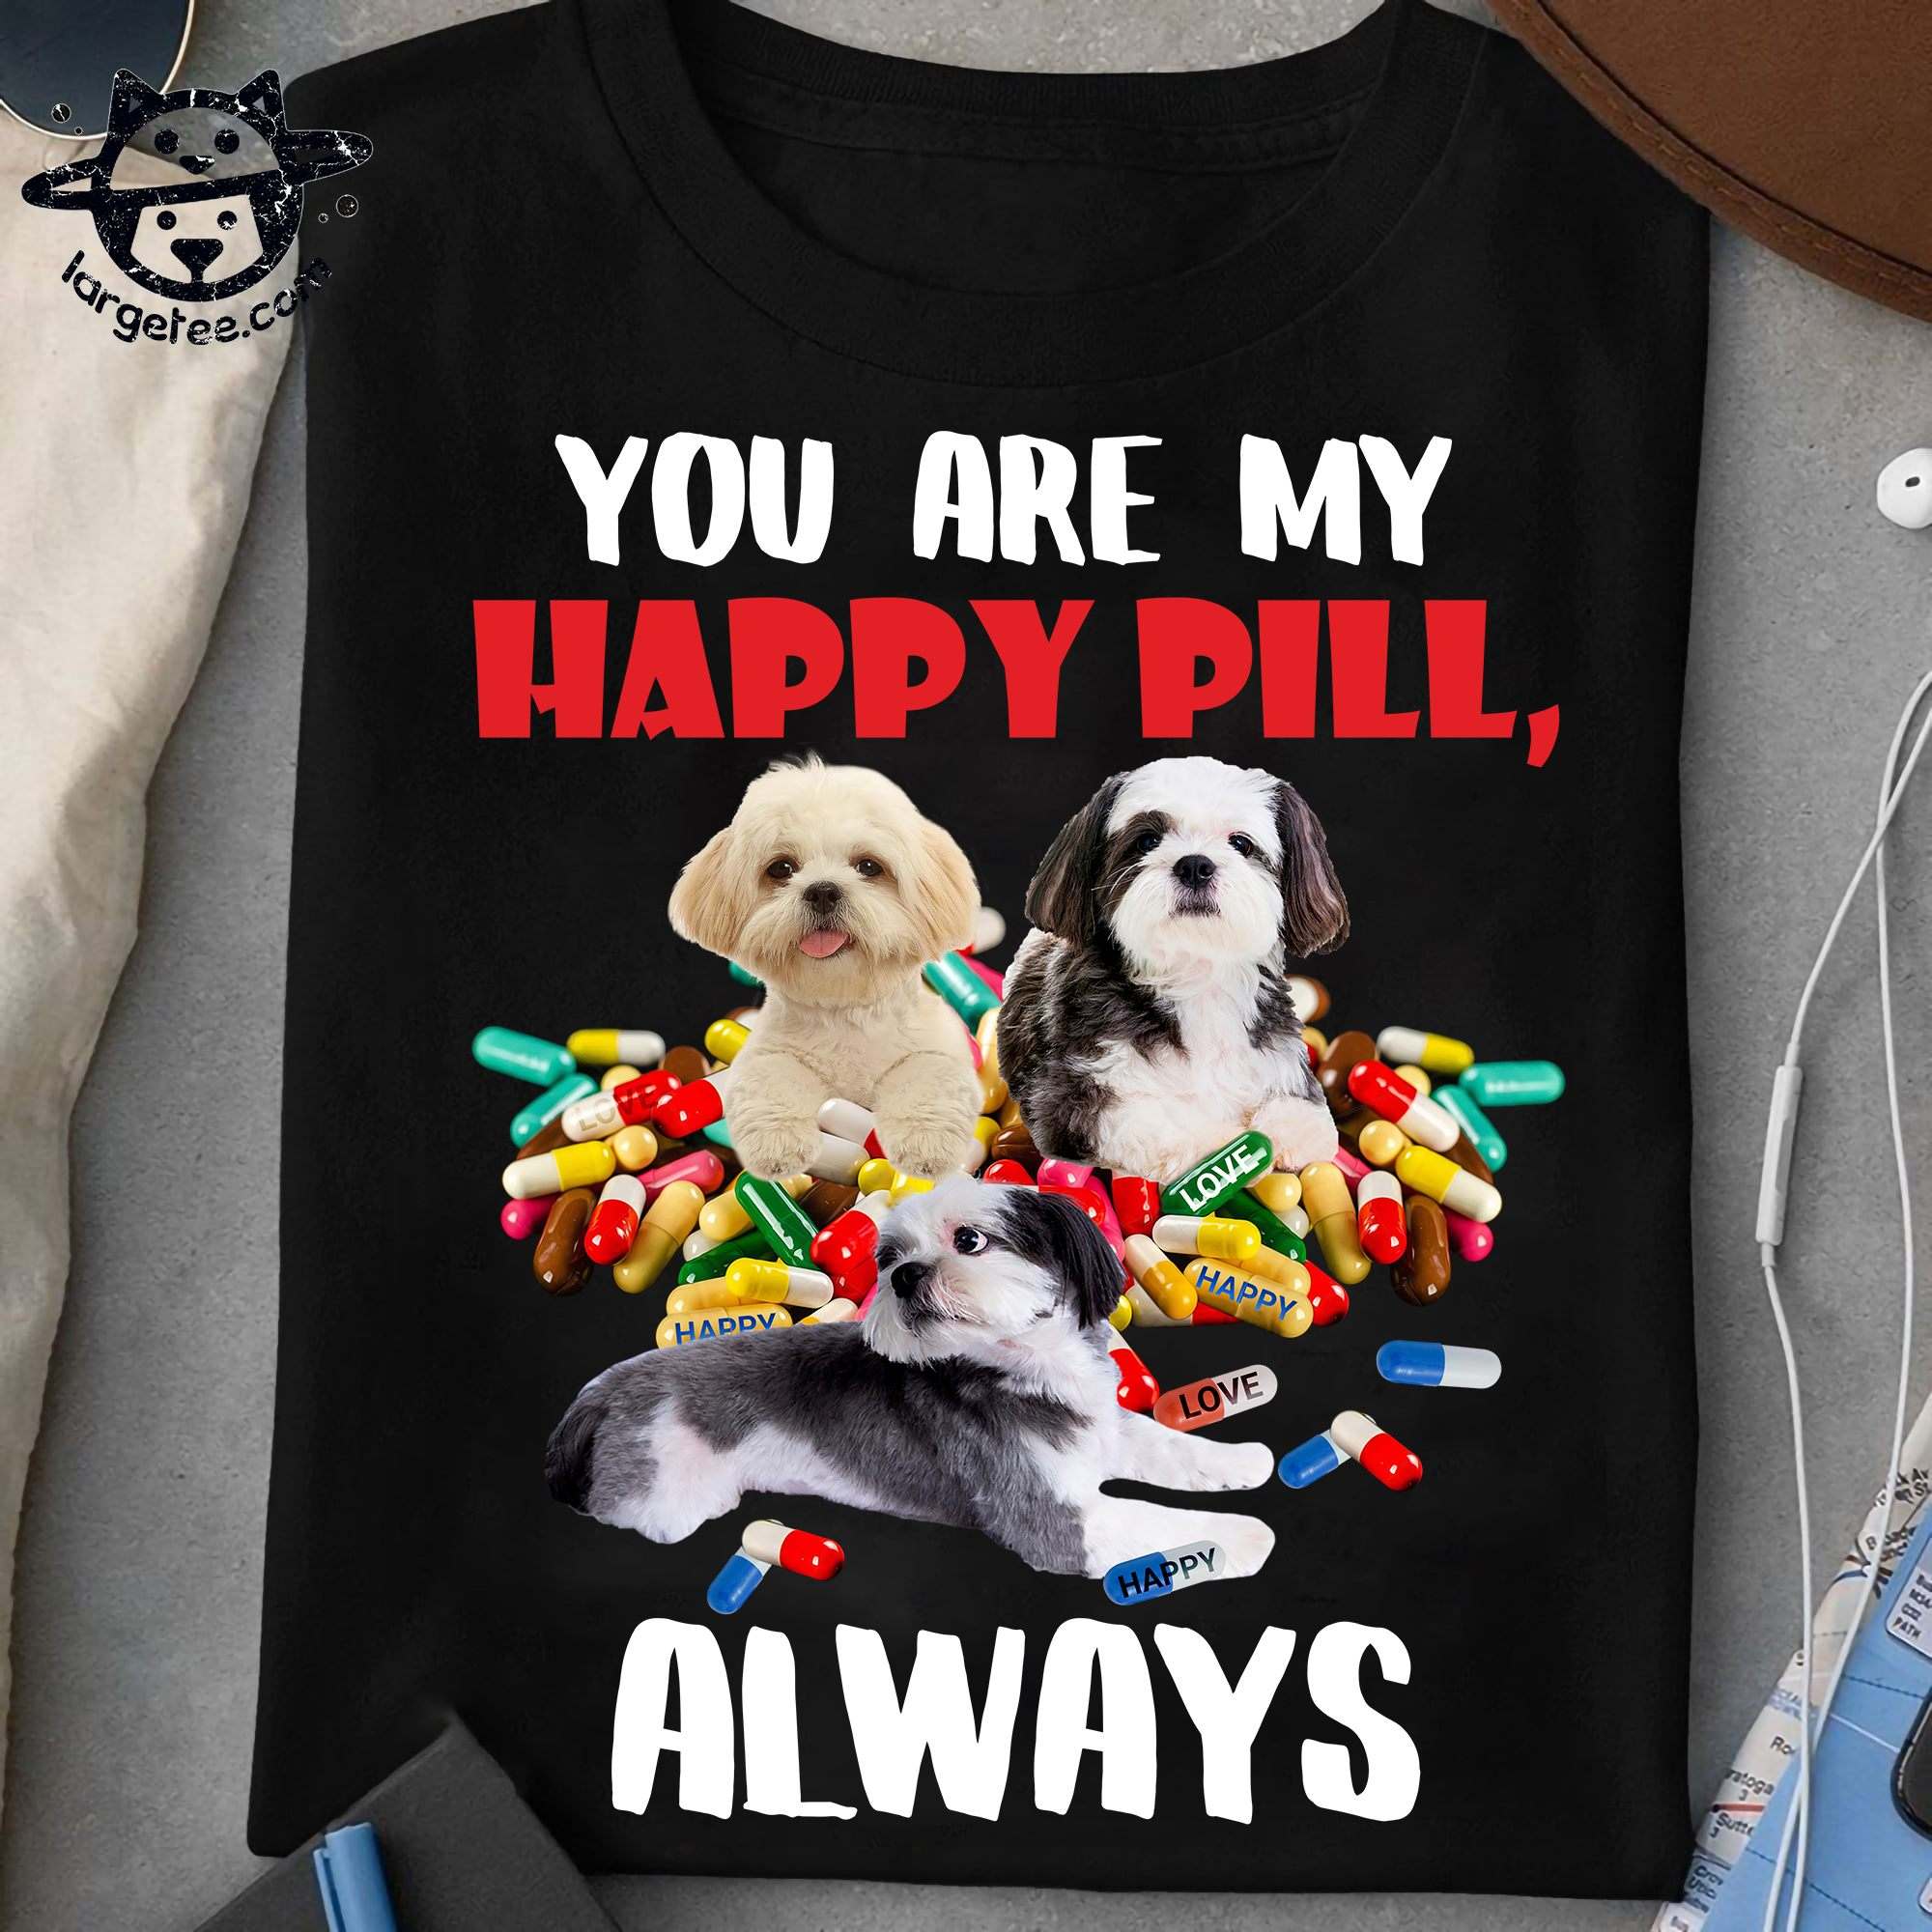 You are my happy pill, always - Shih Tzu happy pill